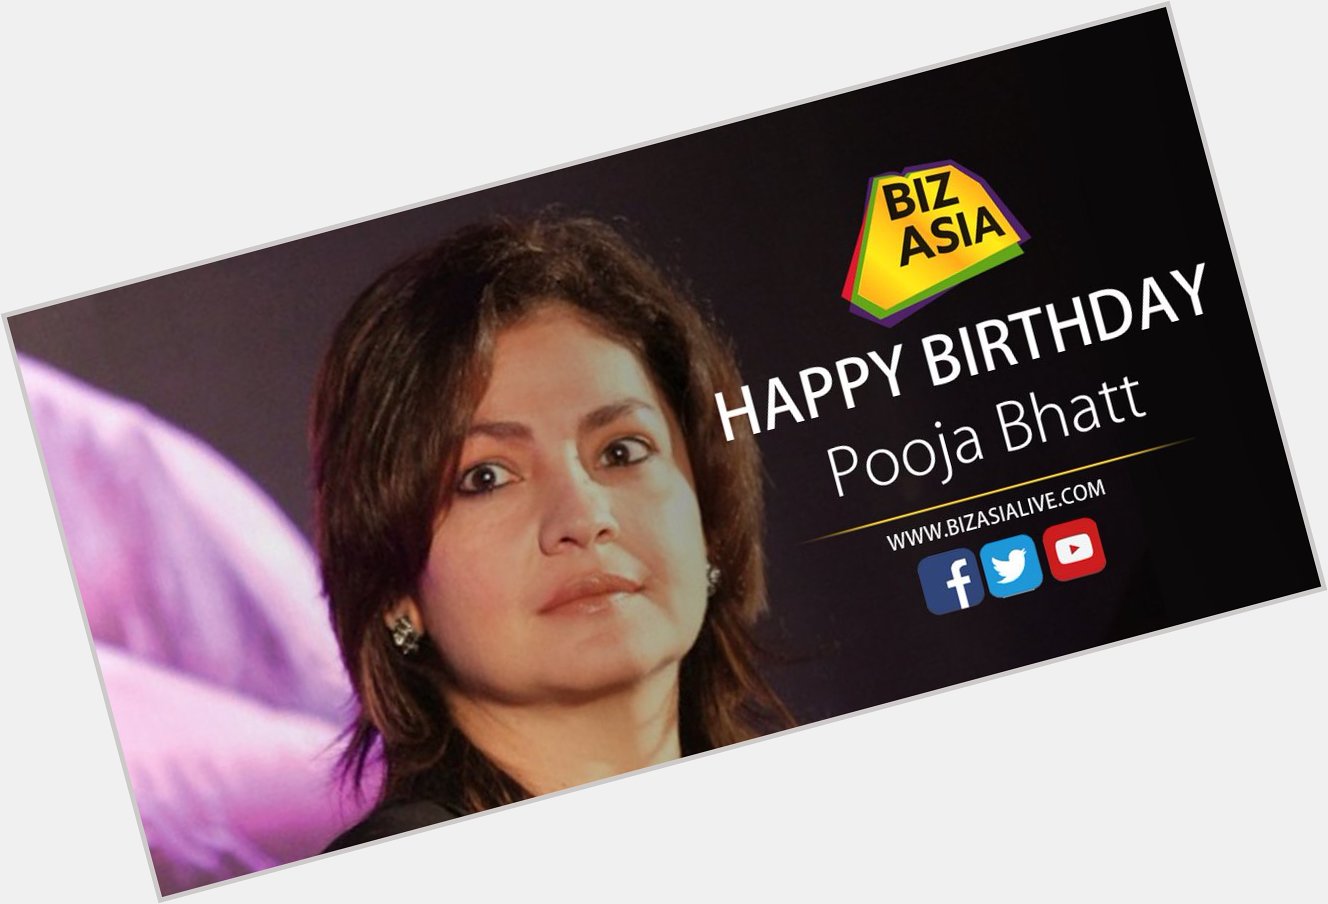  wishes Pooja Bhatt a very happy birthday.  